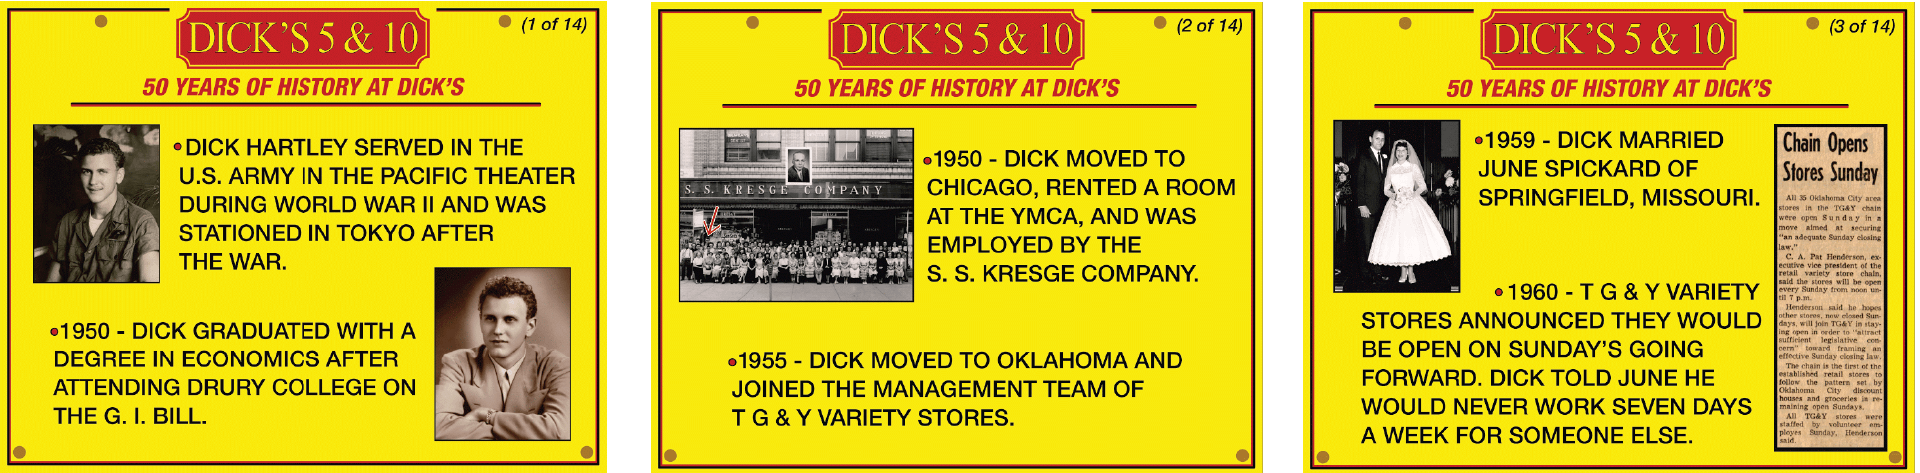 dicks 5 & 10 history 1